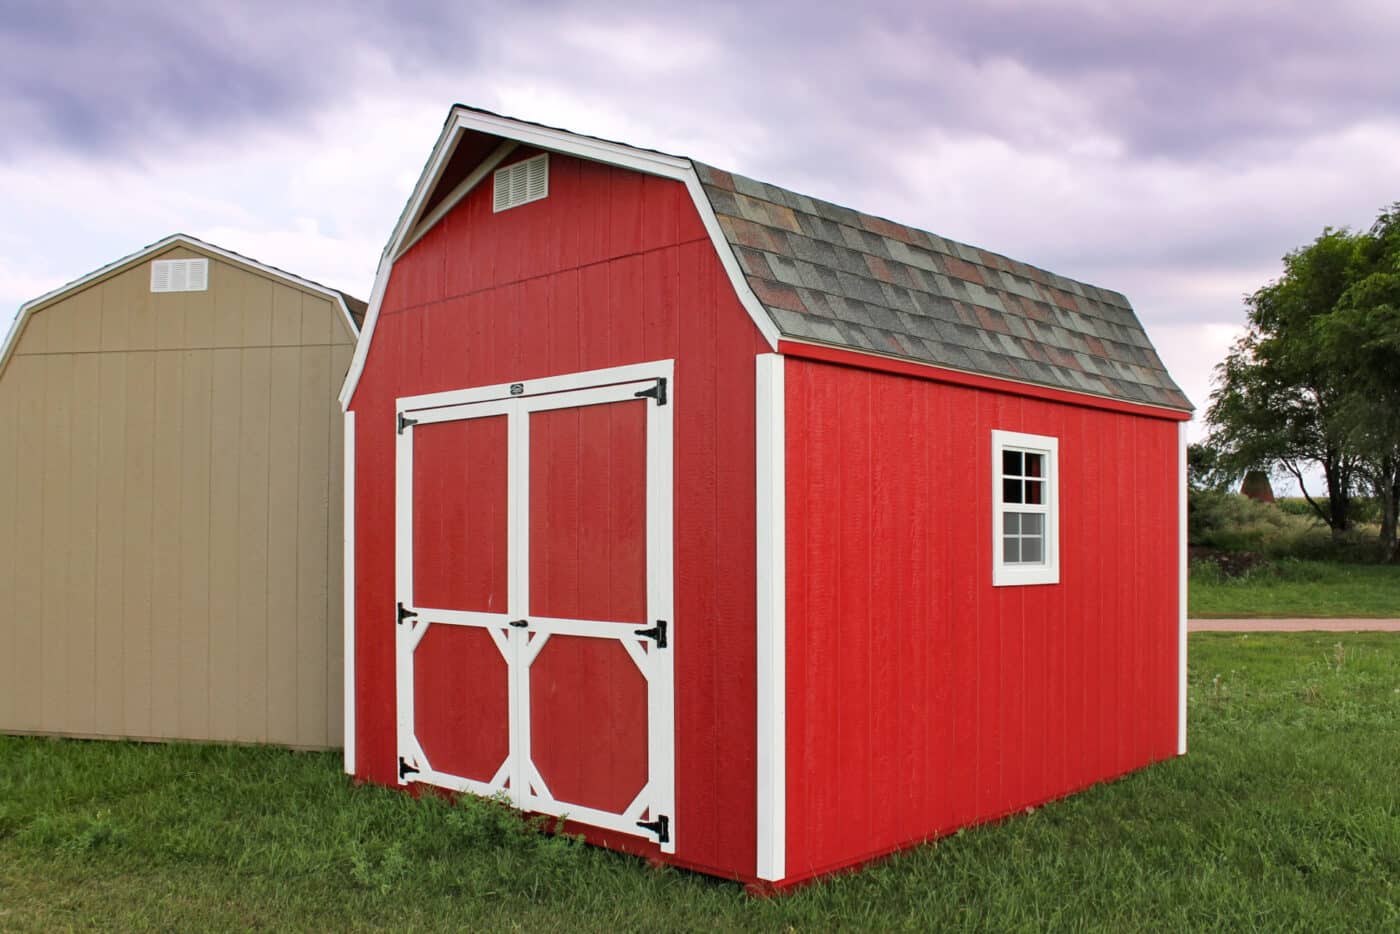 High Barn detached storage shed